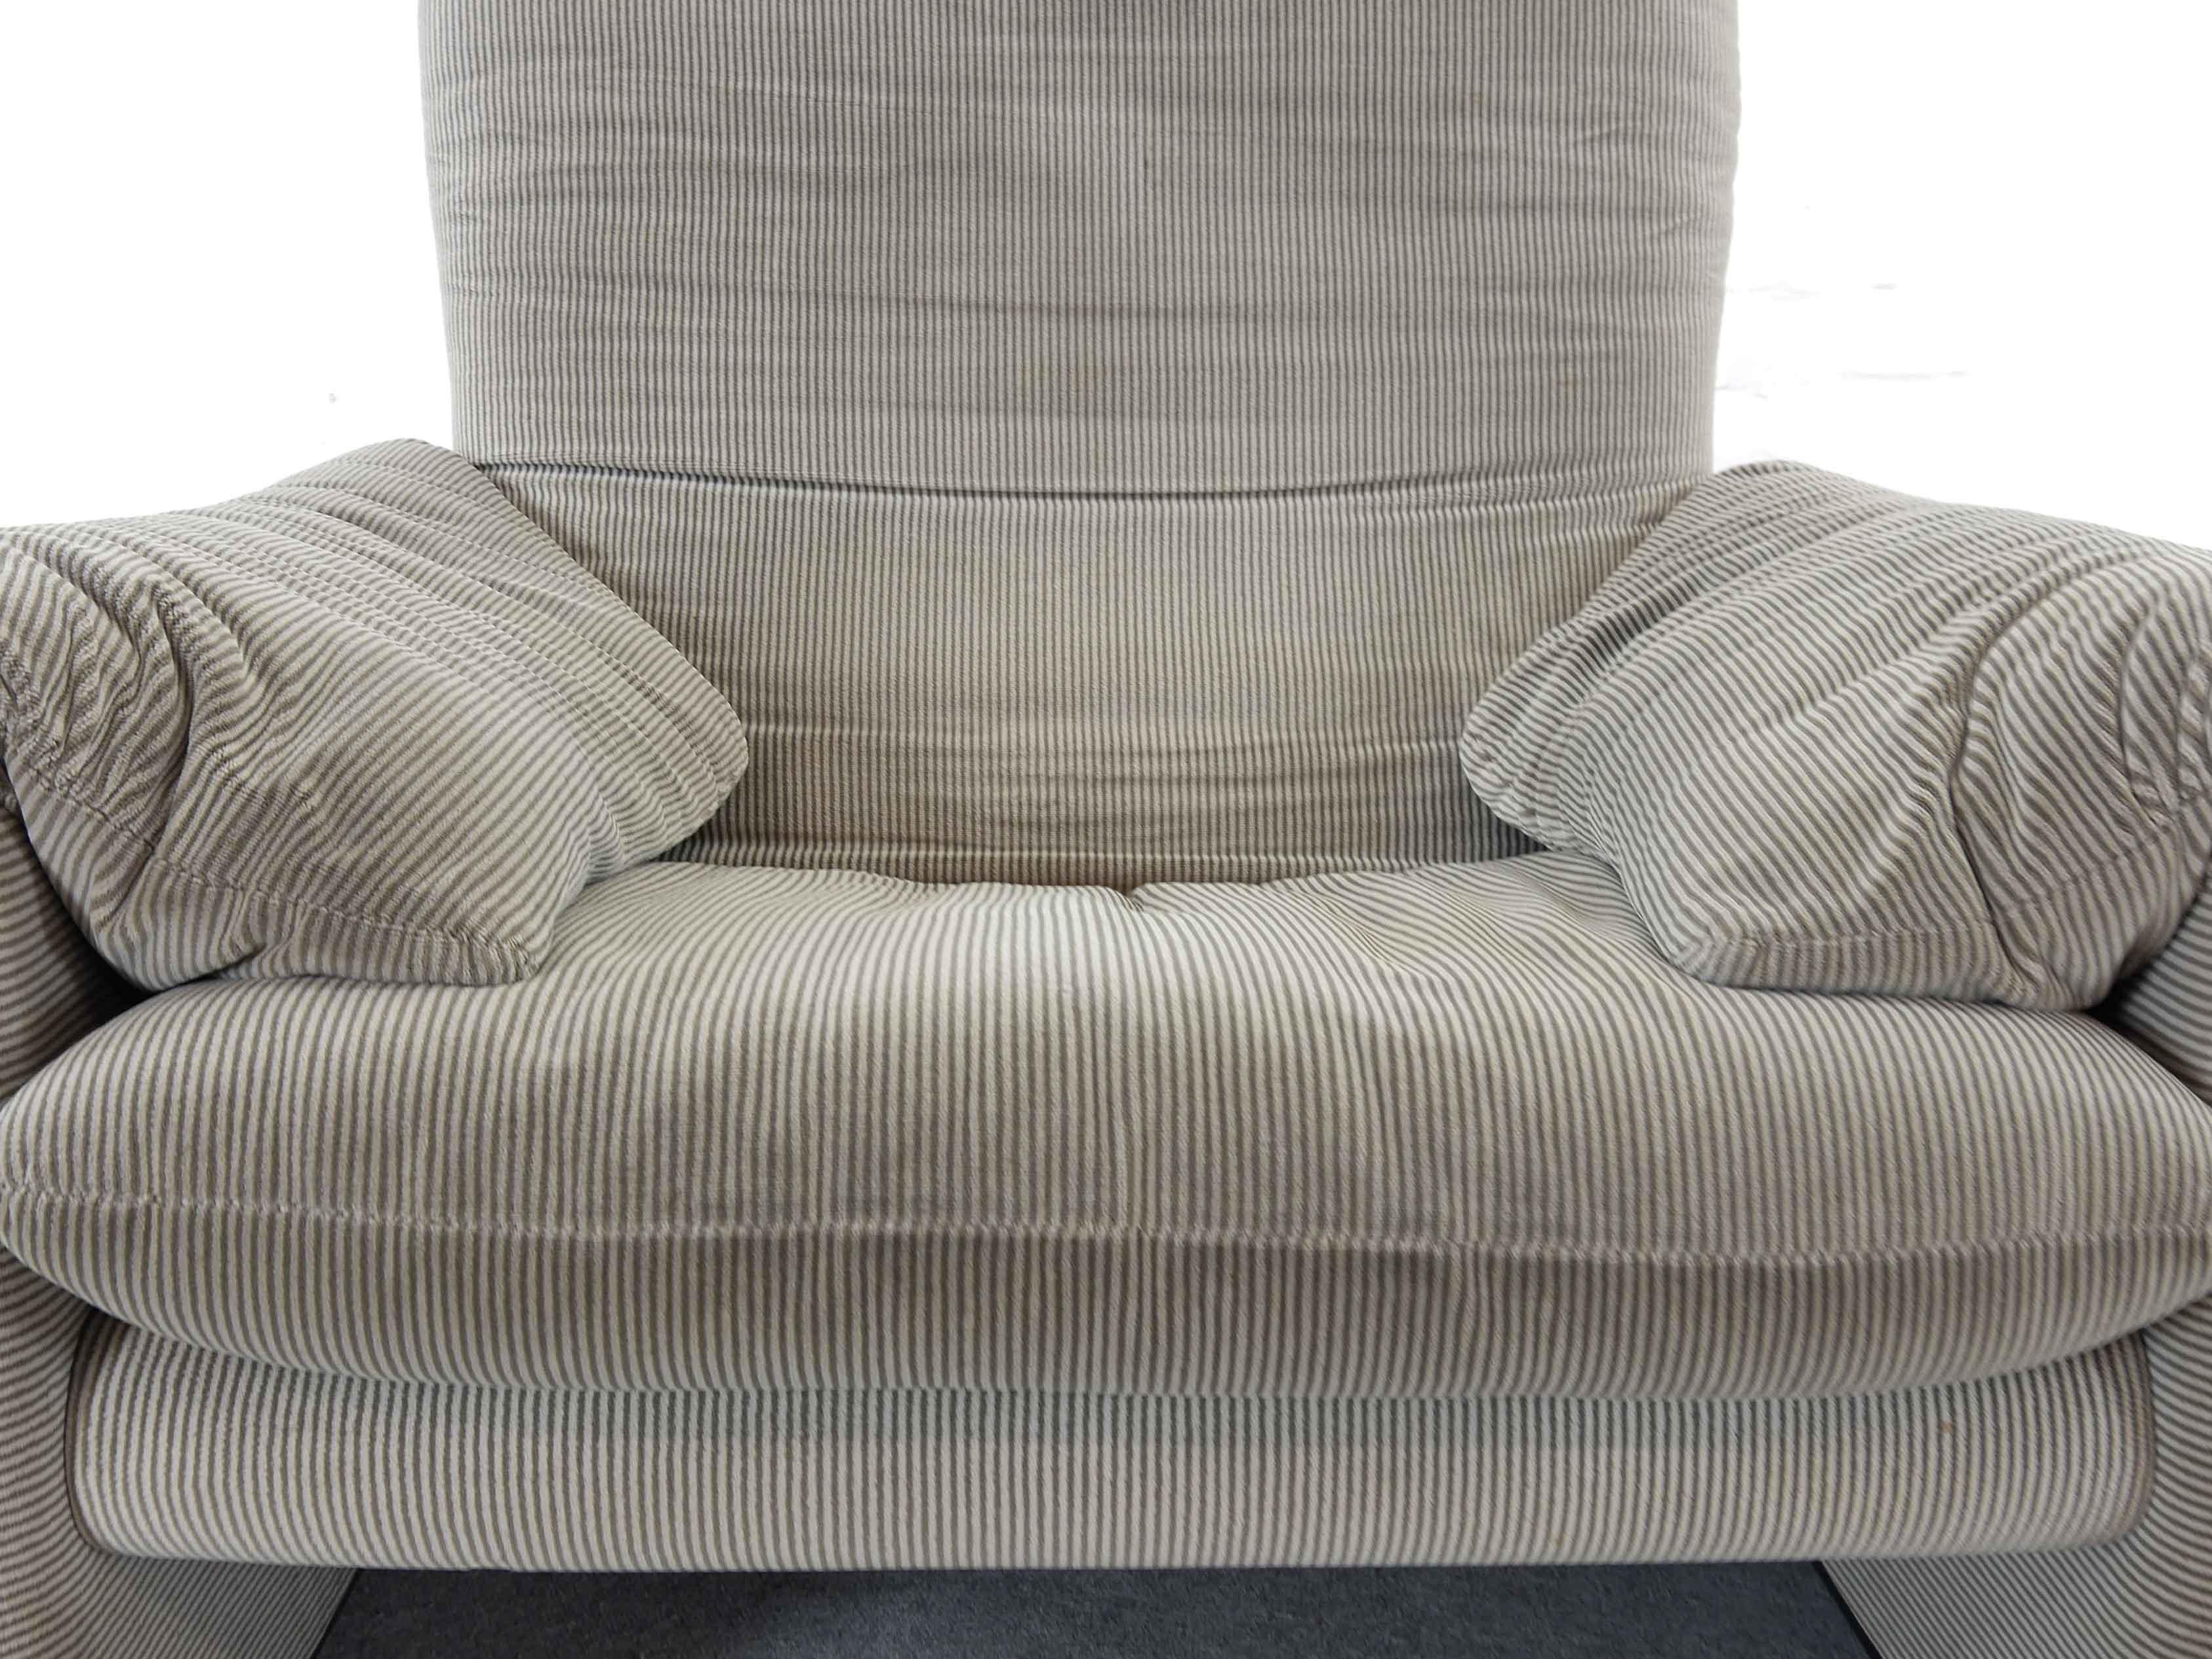 Cassina Maralunga Chair and Ottoman /Stool in Grey Striped Fabrics 2